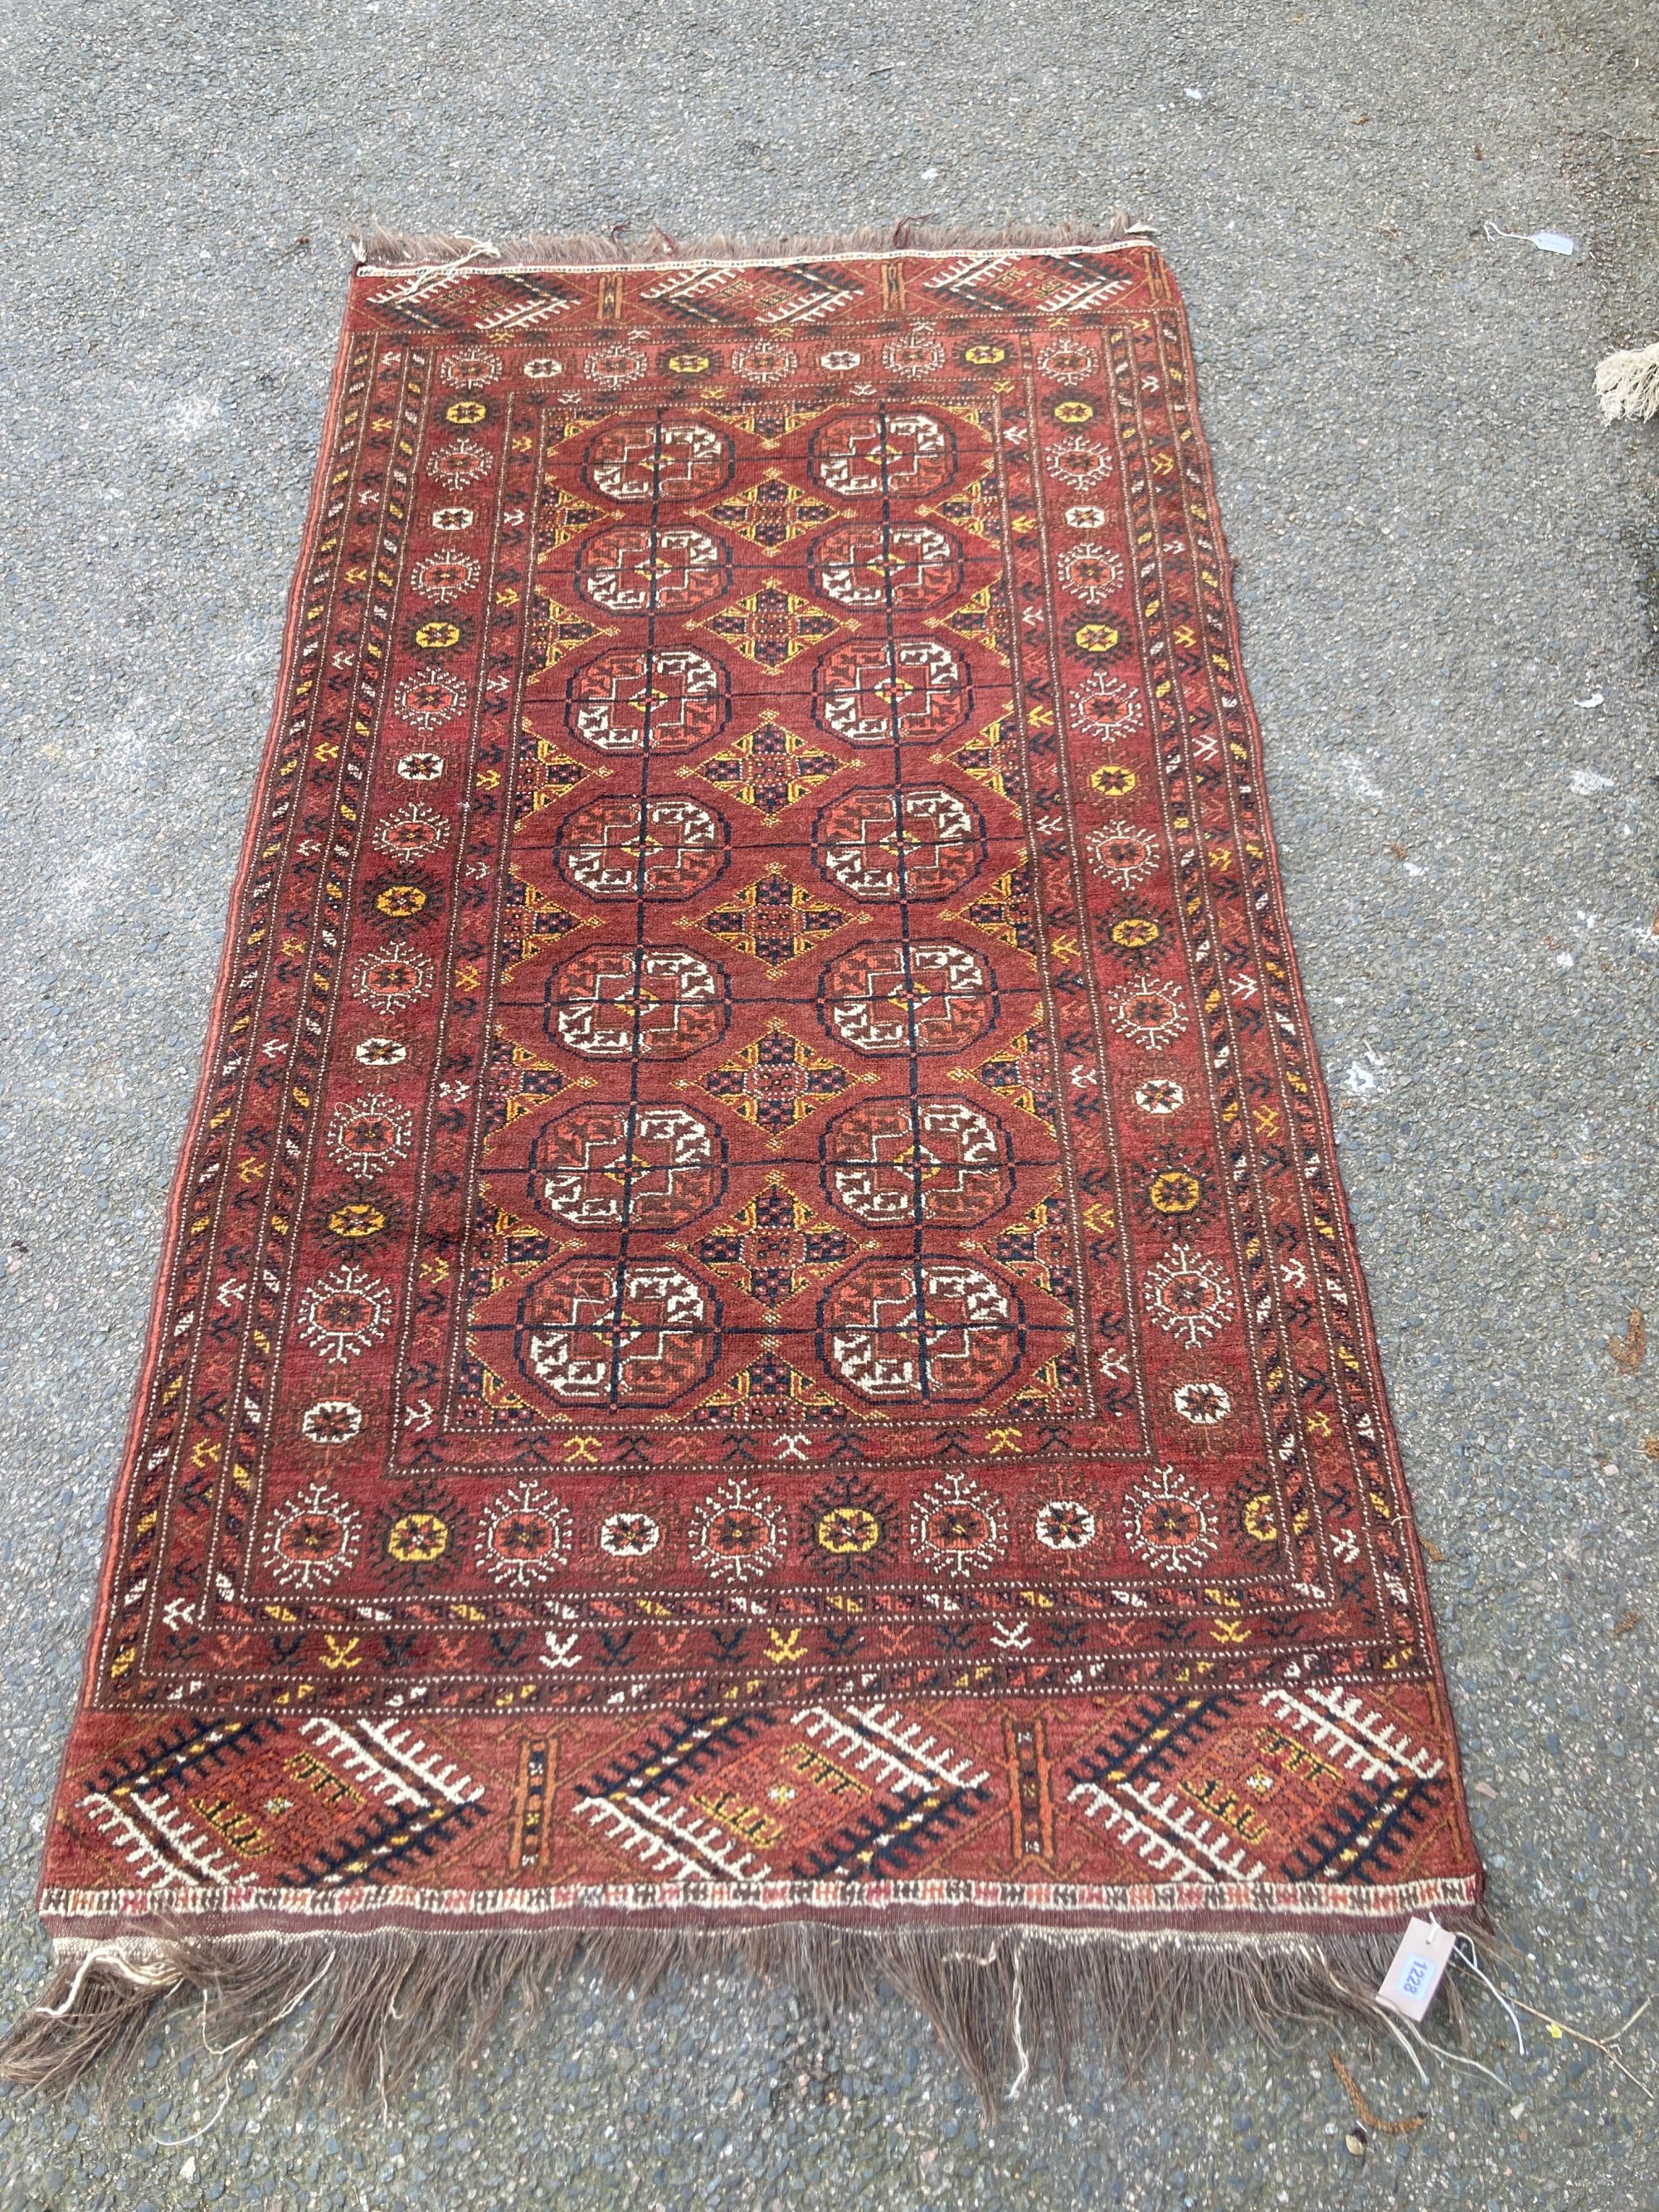 A Bokhara burgundy ground rug, 210 x 113cm